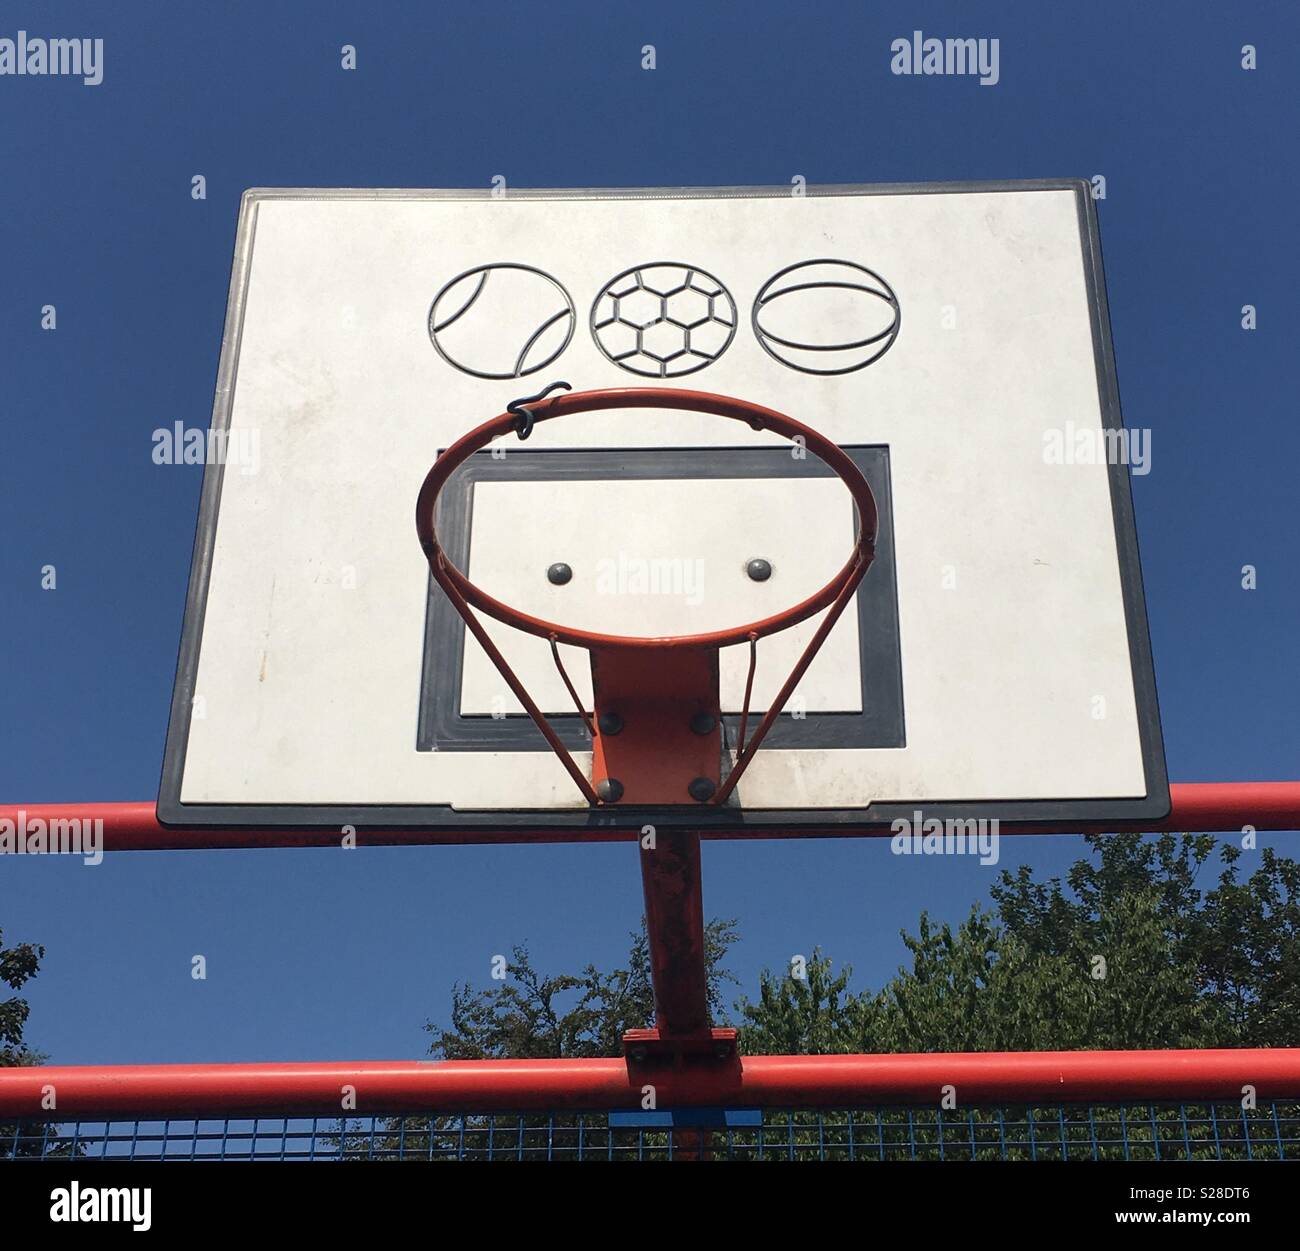 A basketball hoop (with no net) against a cloudless, deep blue summer sky. Stock Photo